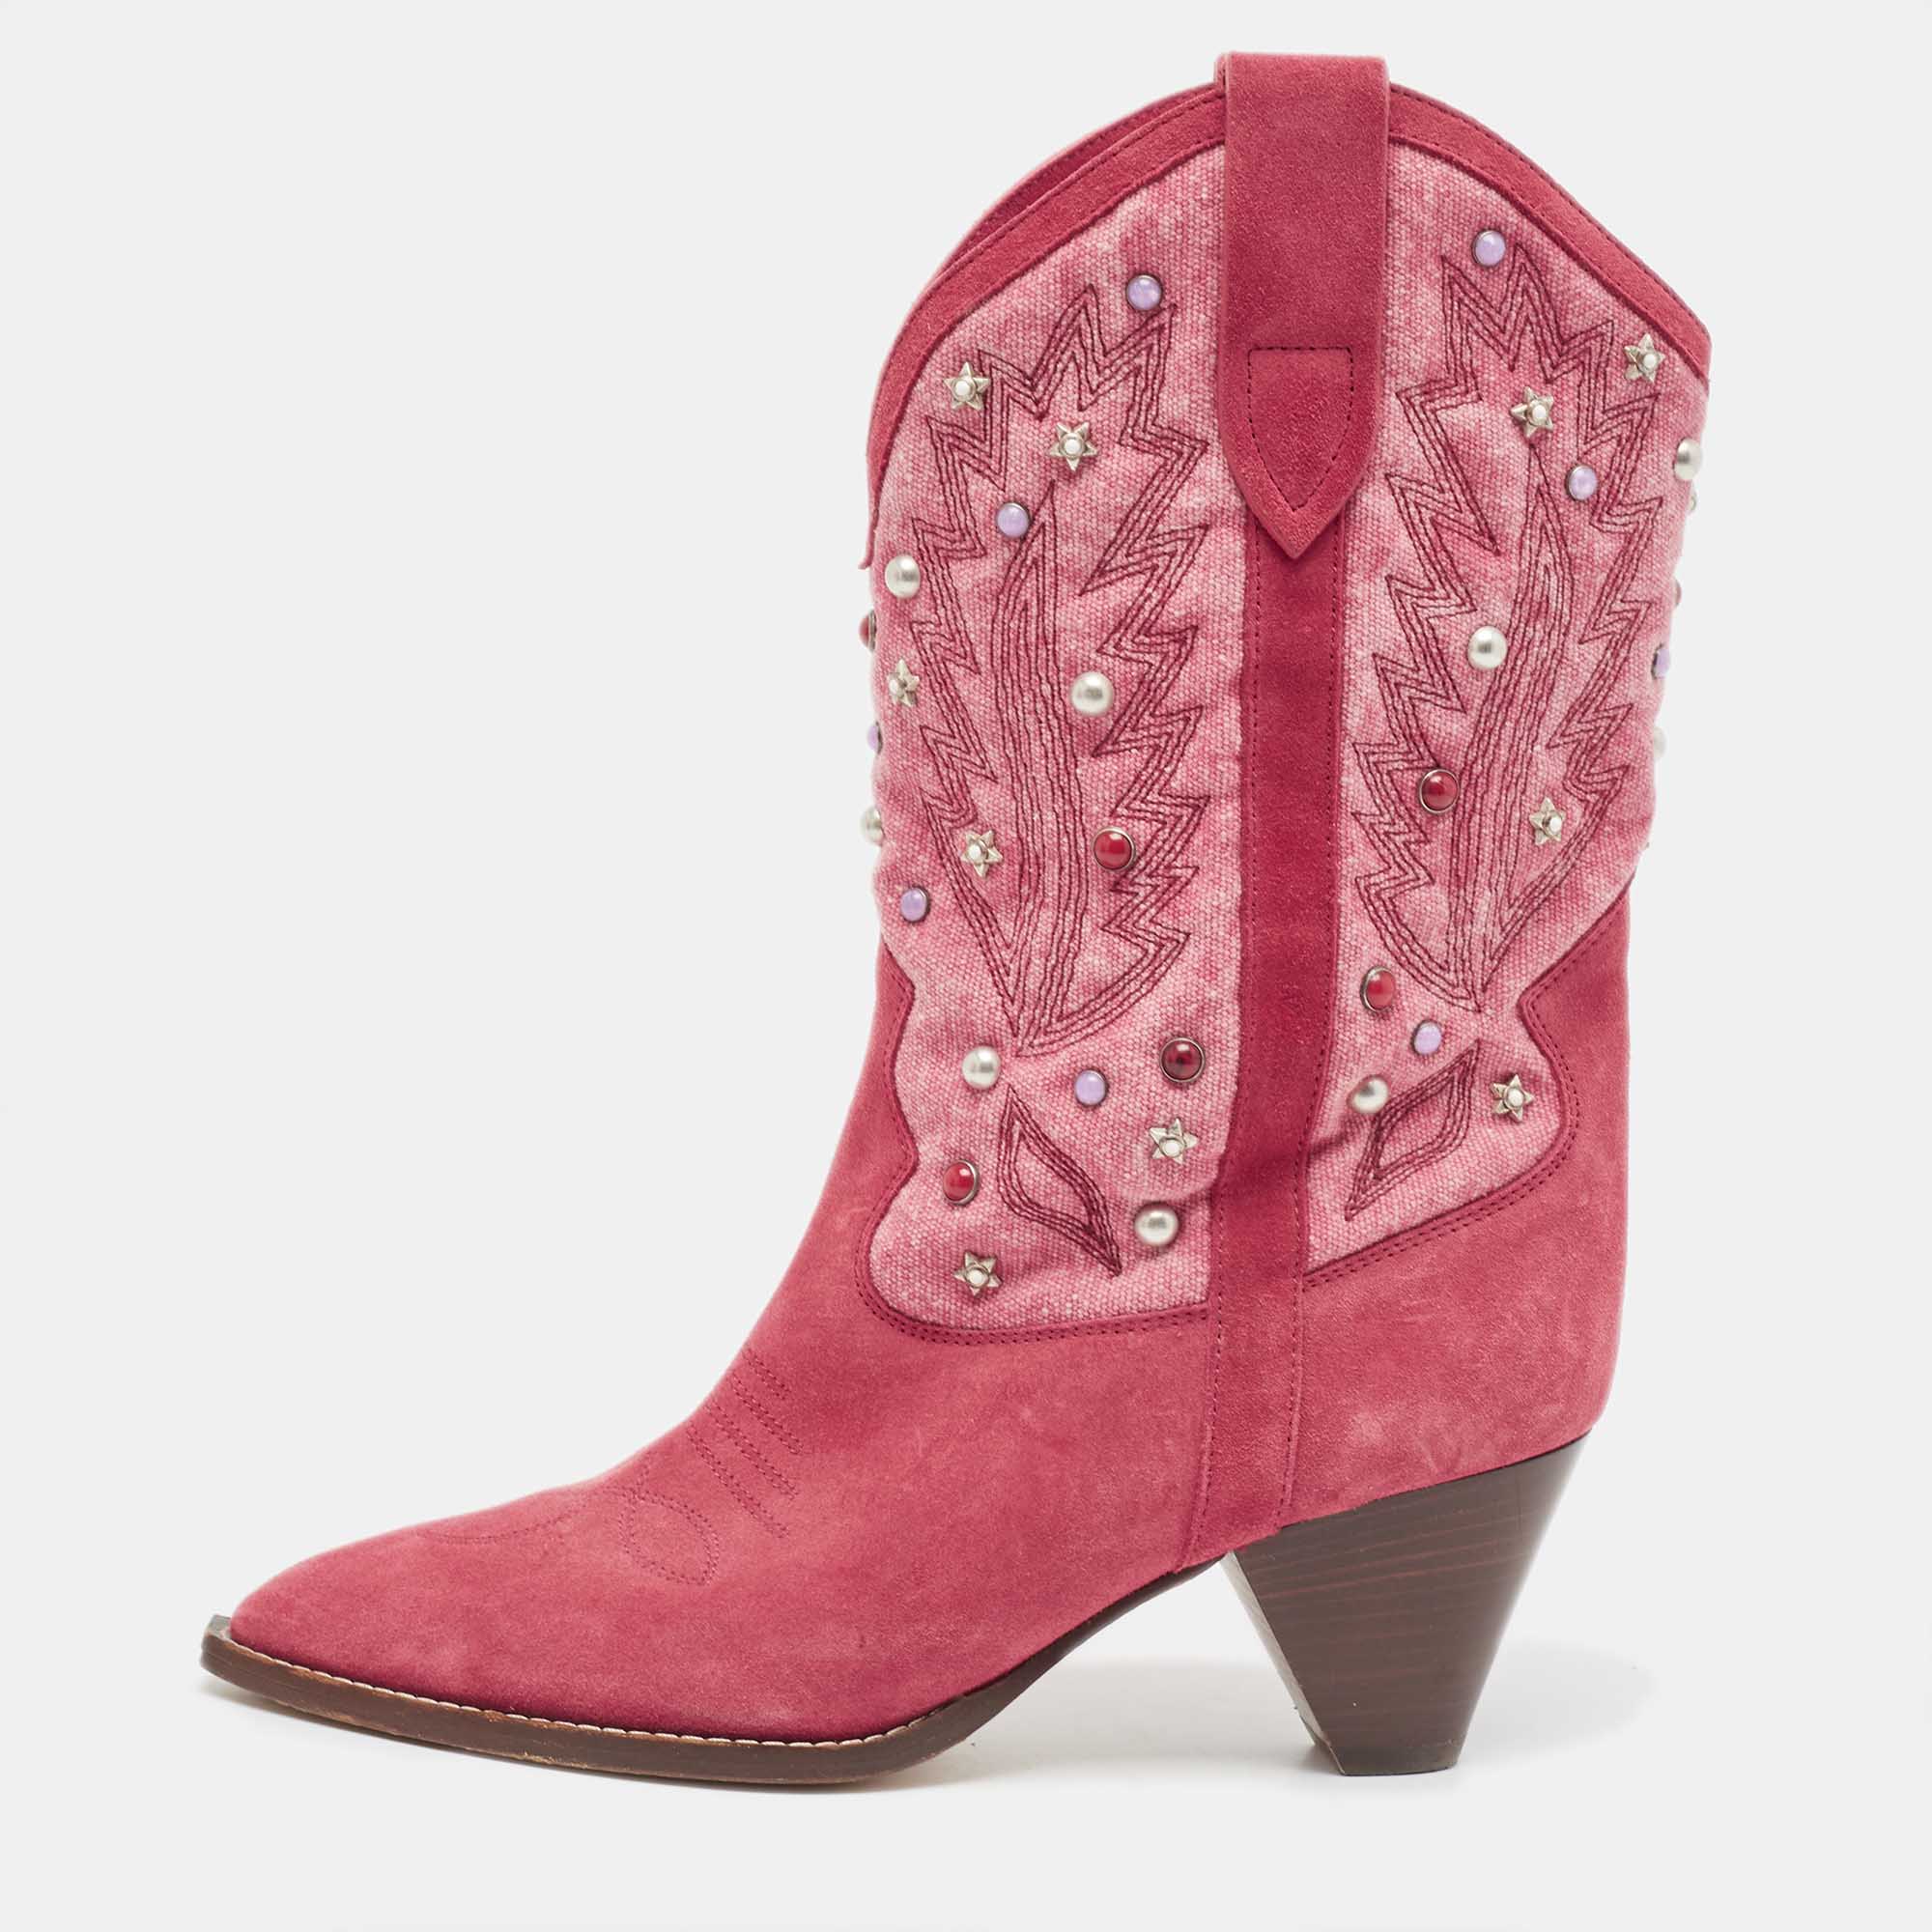 Isabel marant pink suede embellished ankle boots size 38